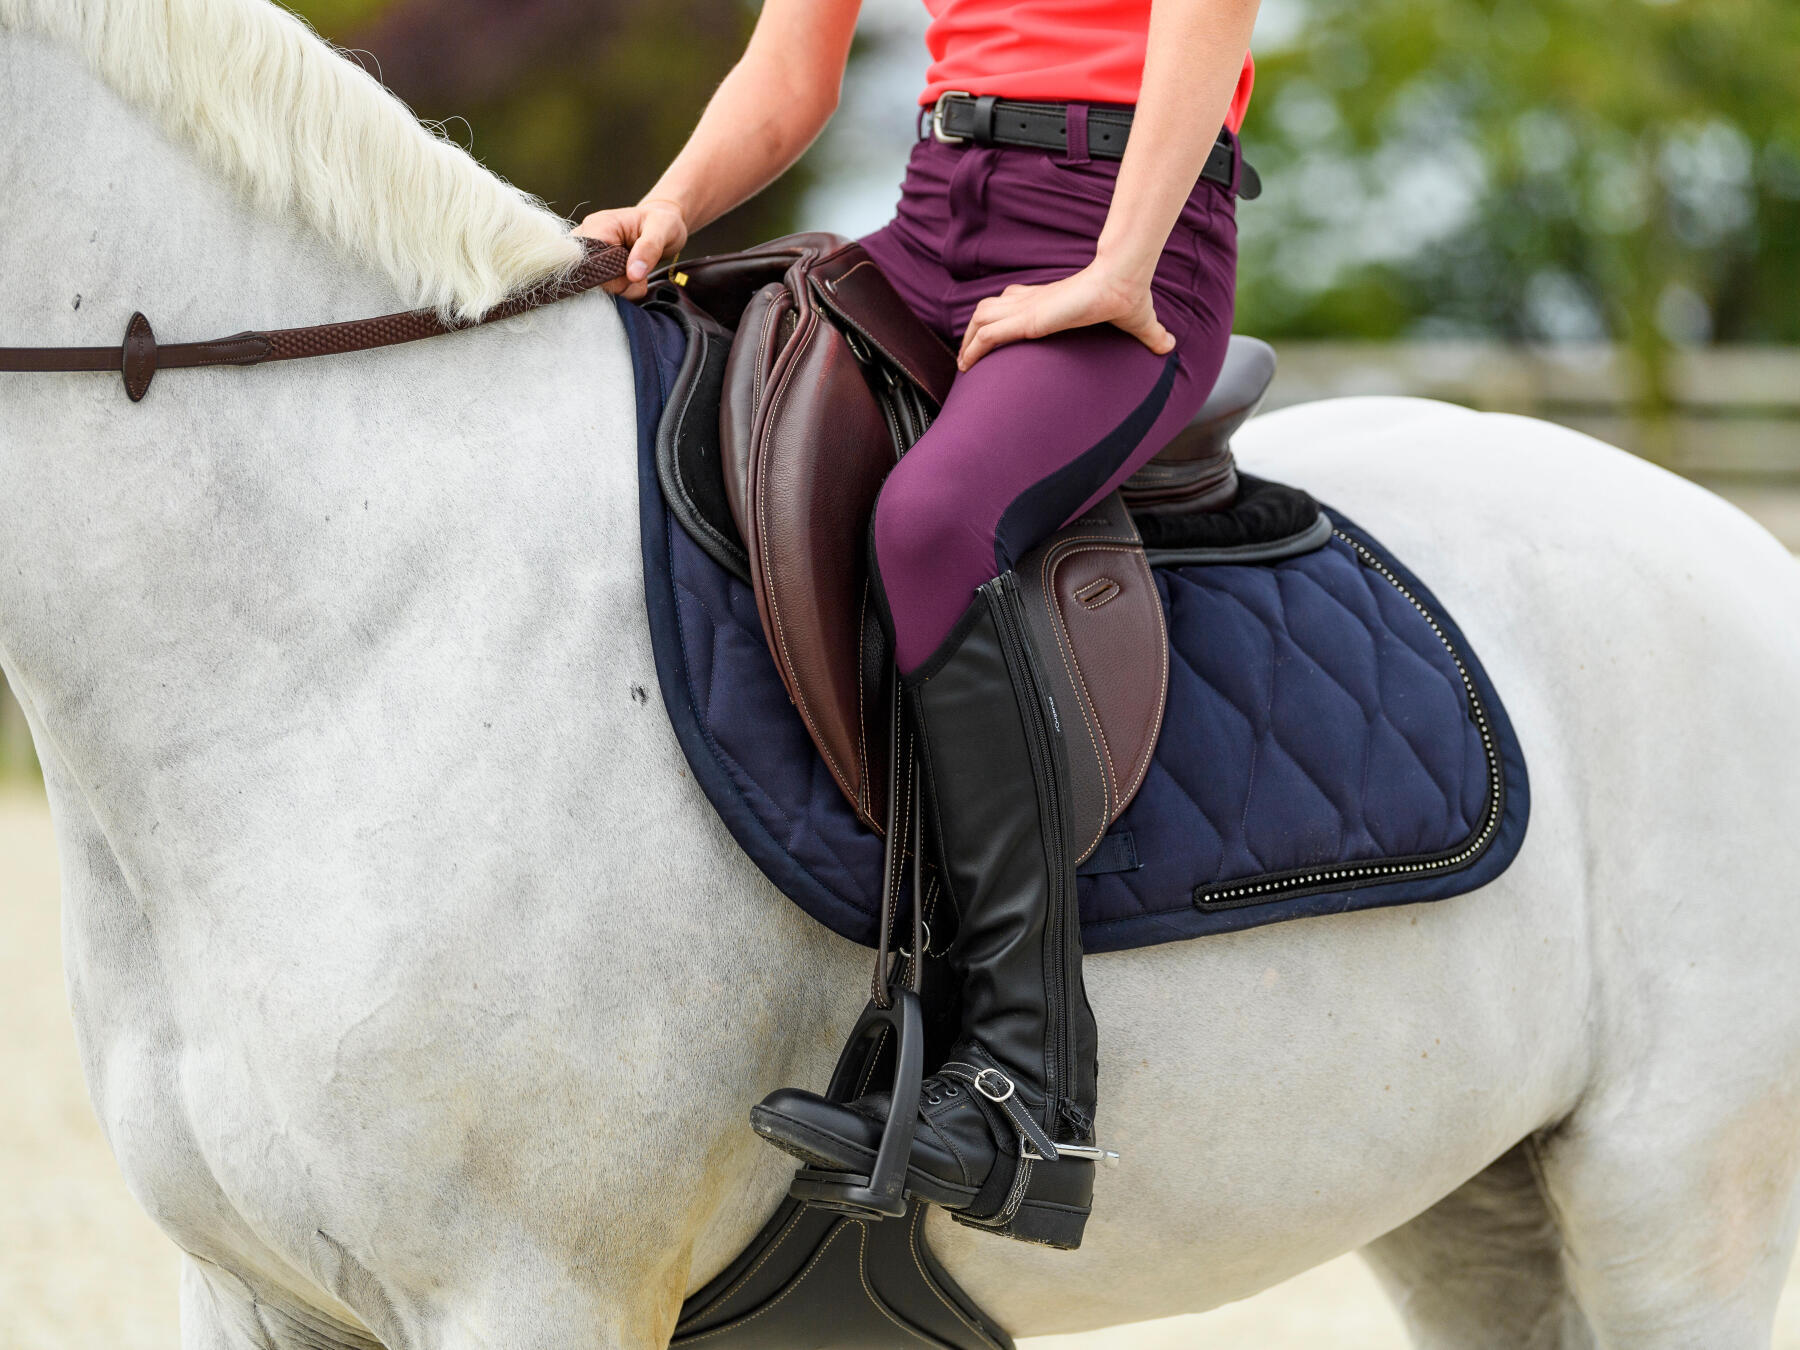 woman wearing riding pants while horseback riding